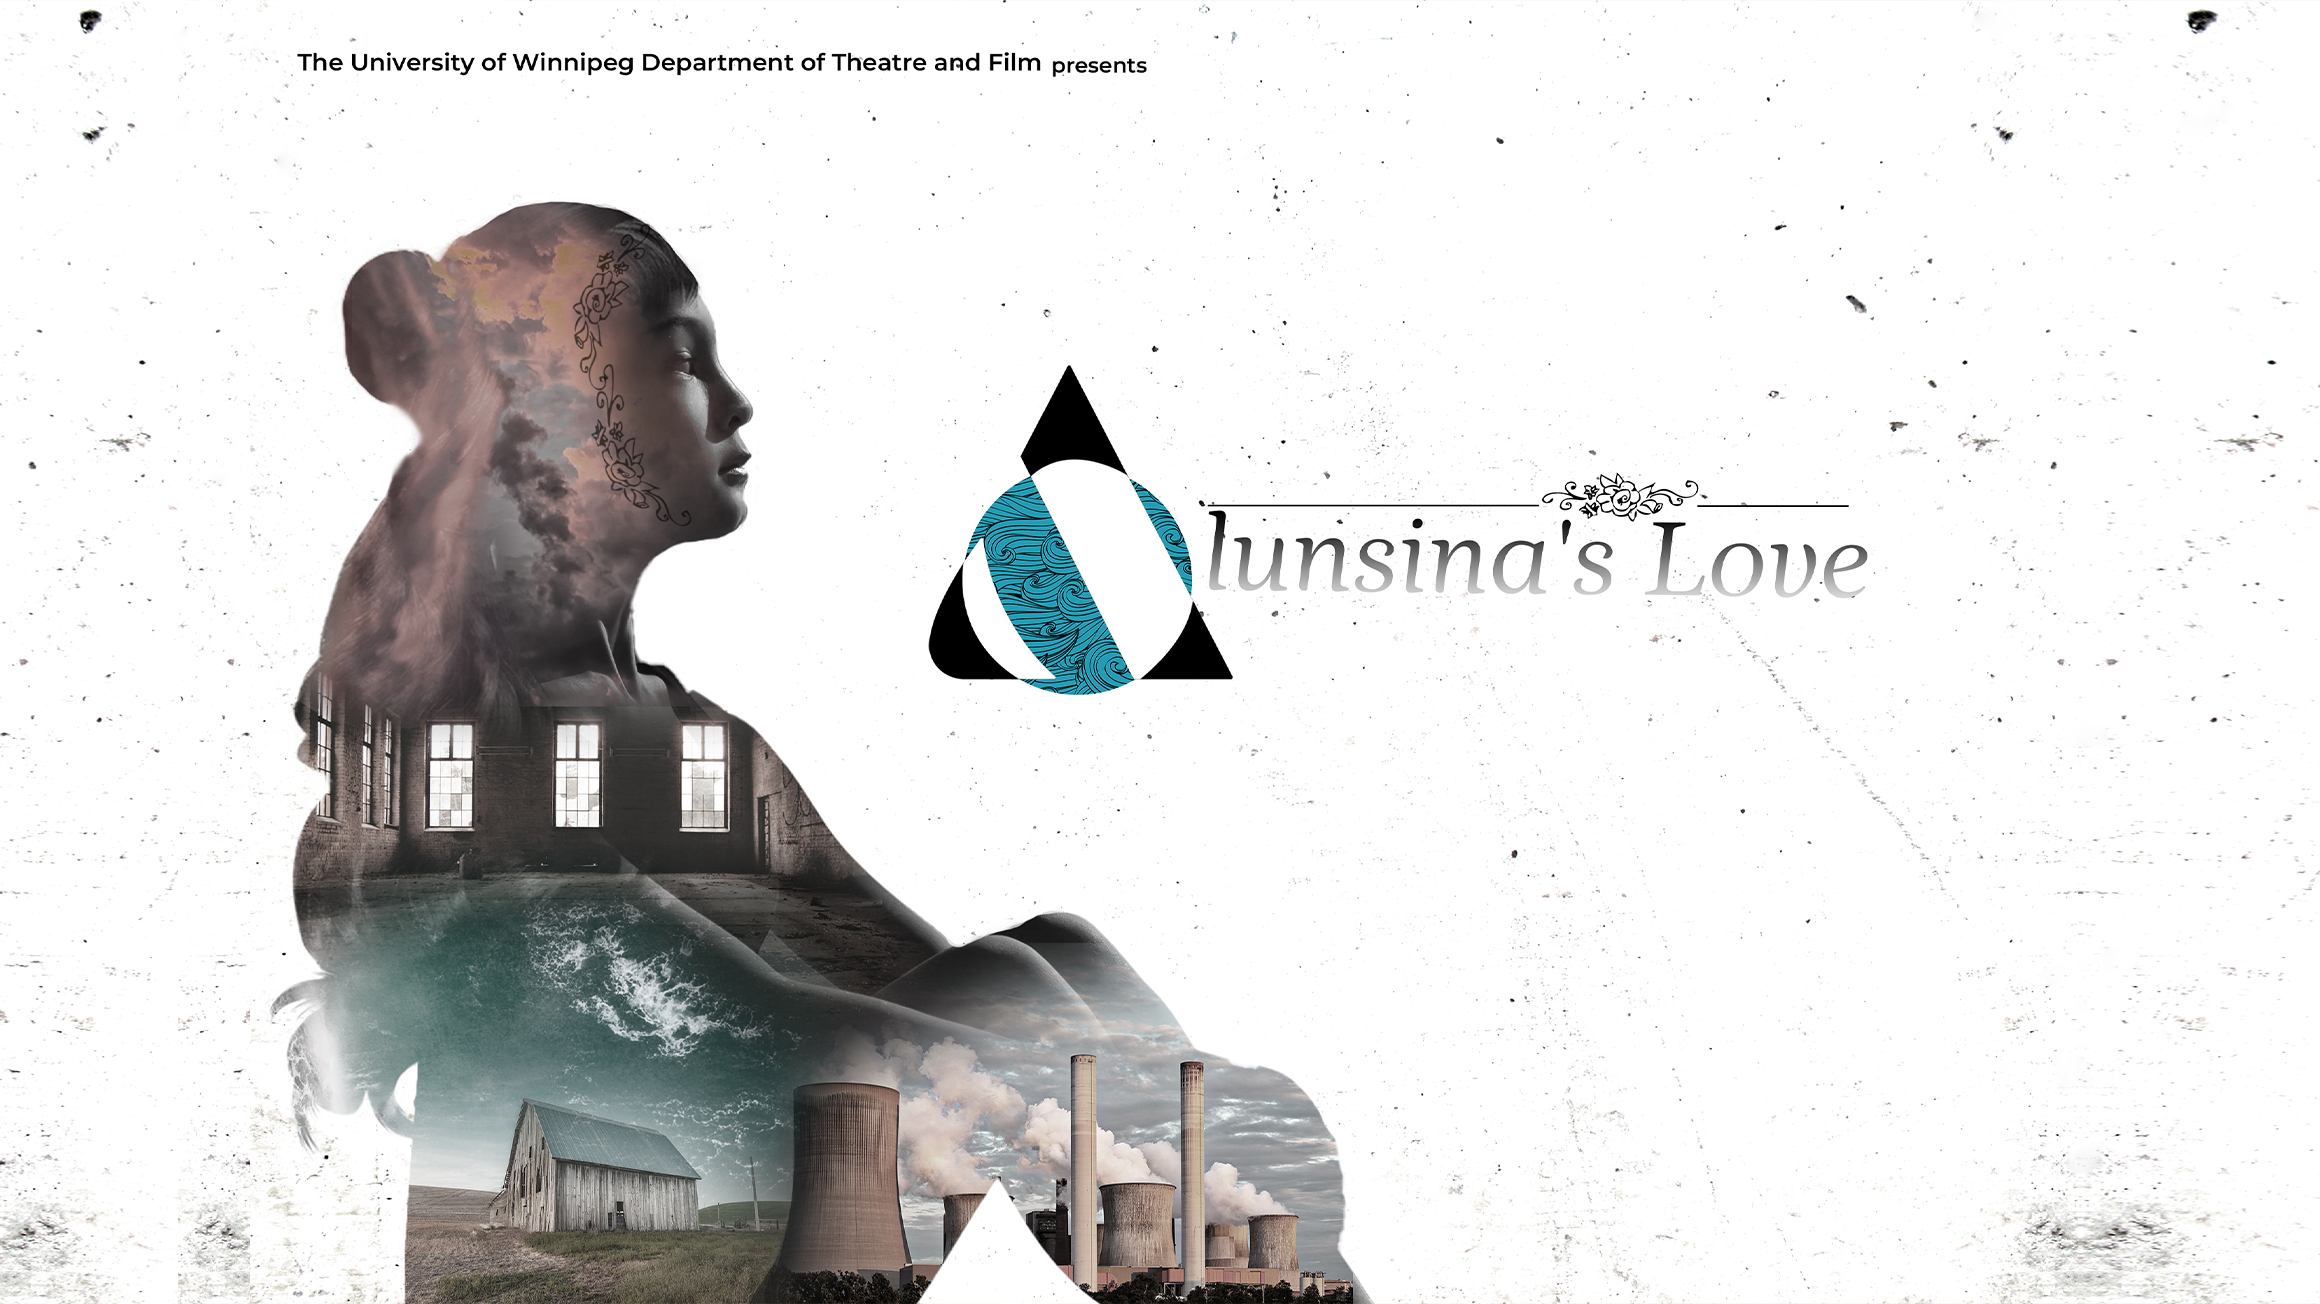 ‘Alunsina’s Love’ – A world premiere commissioned by UWinnipeg